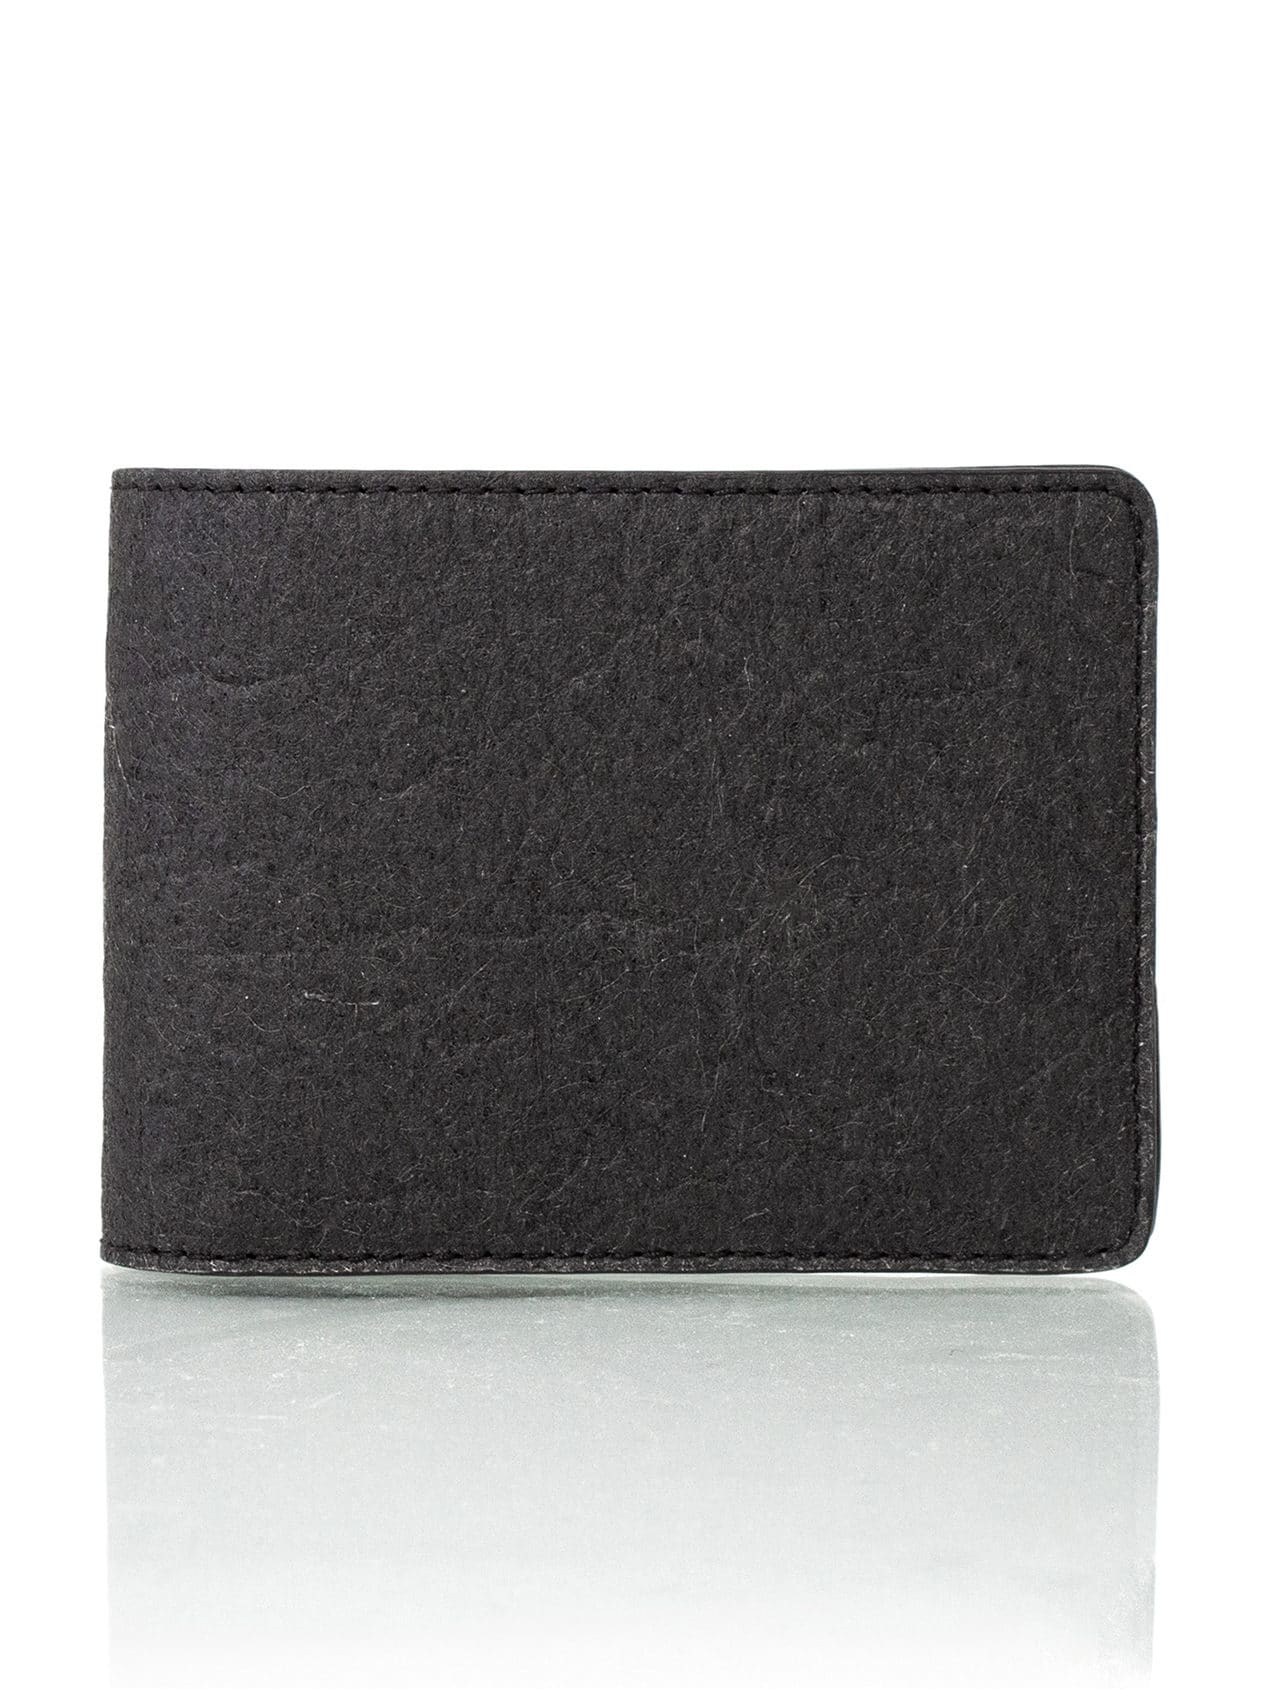 vegan wallet black